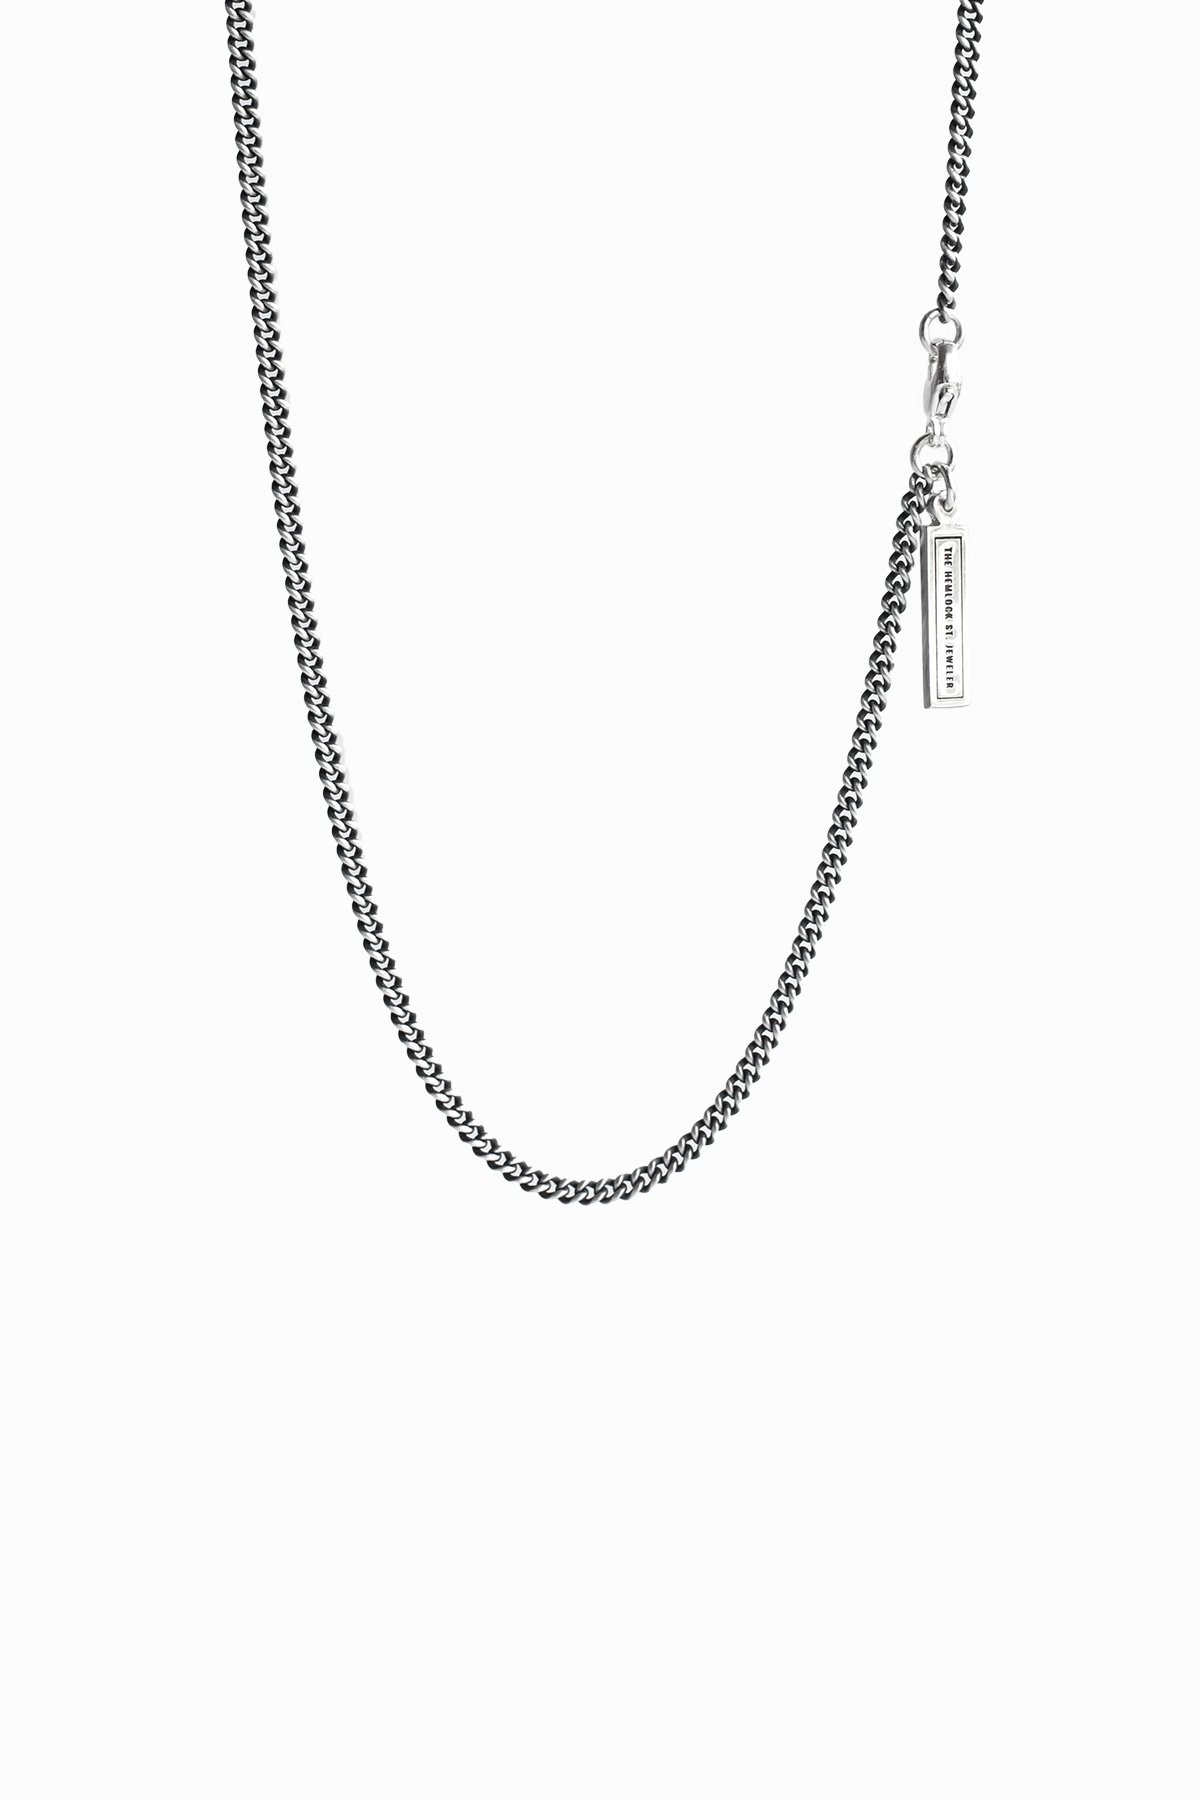 Curb Chain  Medium (Sterling) - The Hemlock Street Jeweler